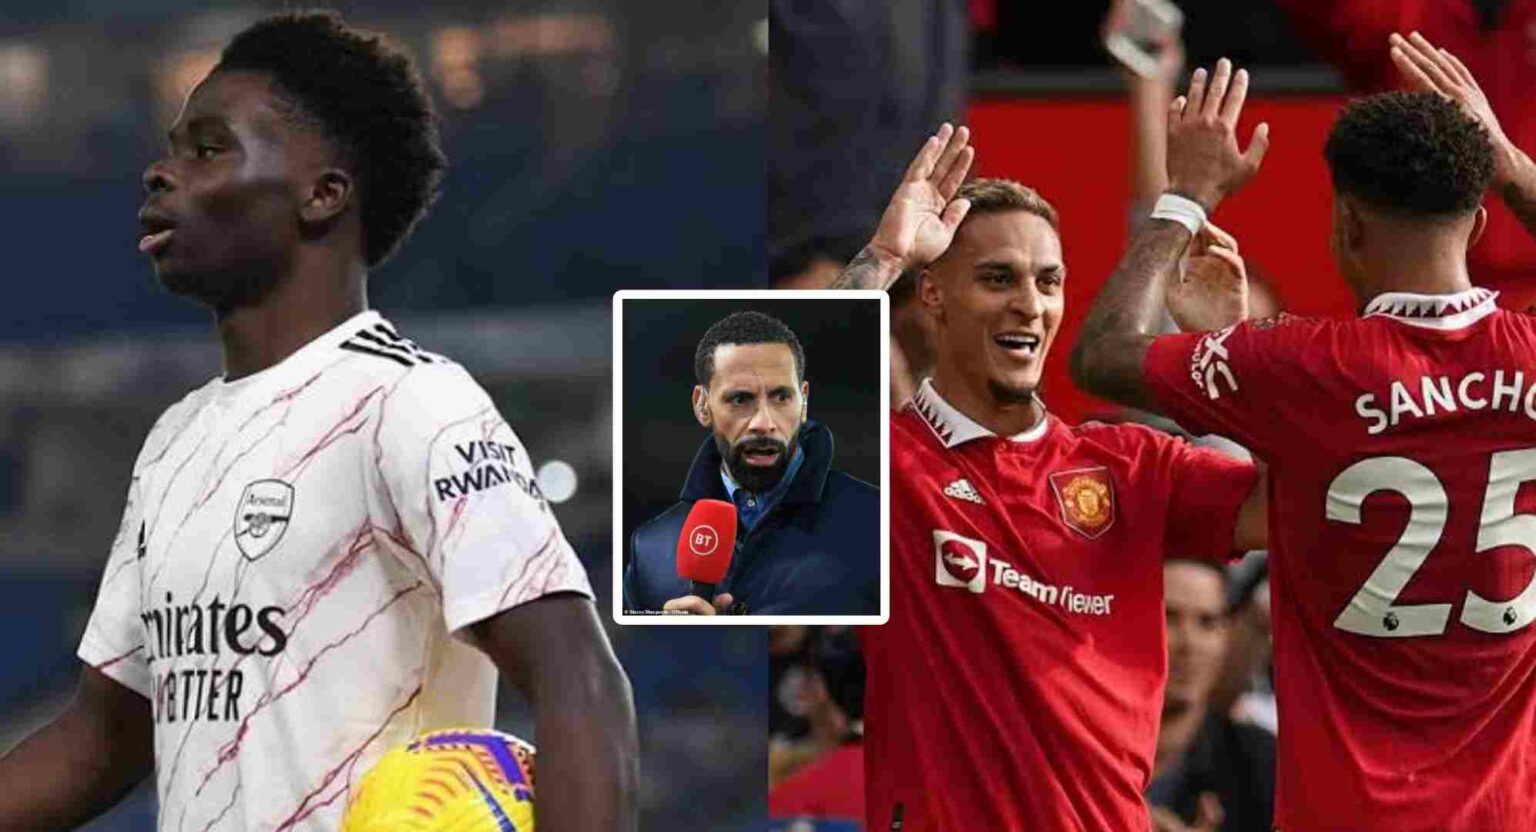 'They don't play like Saka': Rio Ferdinand 'blasts' Antony and Sancho, urging them to learn from Arsenal star Bukayo Saka